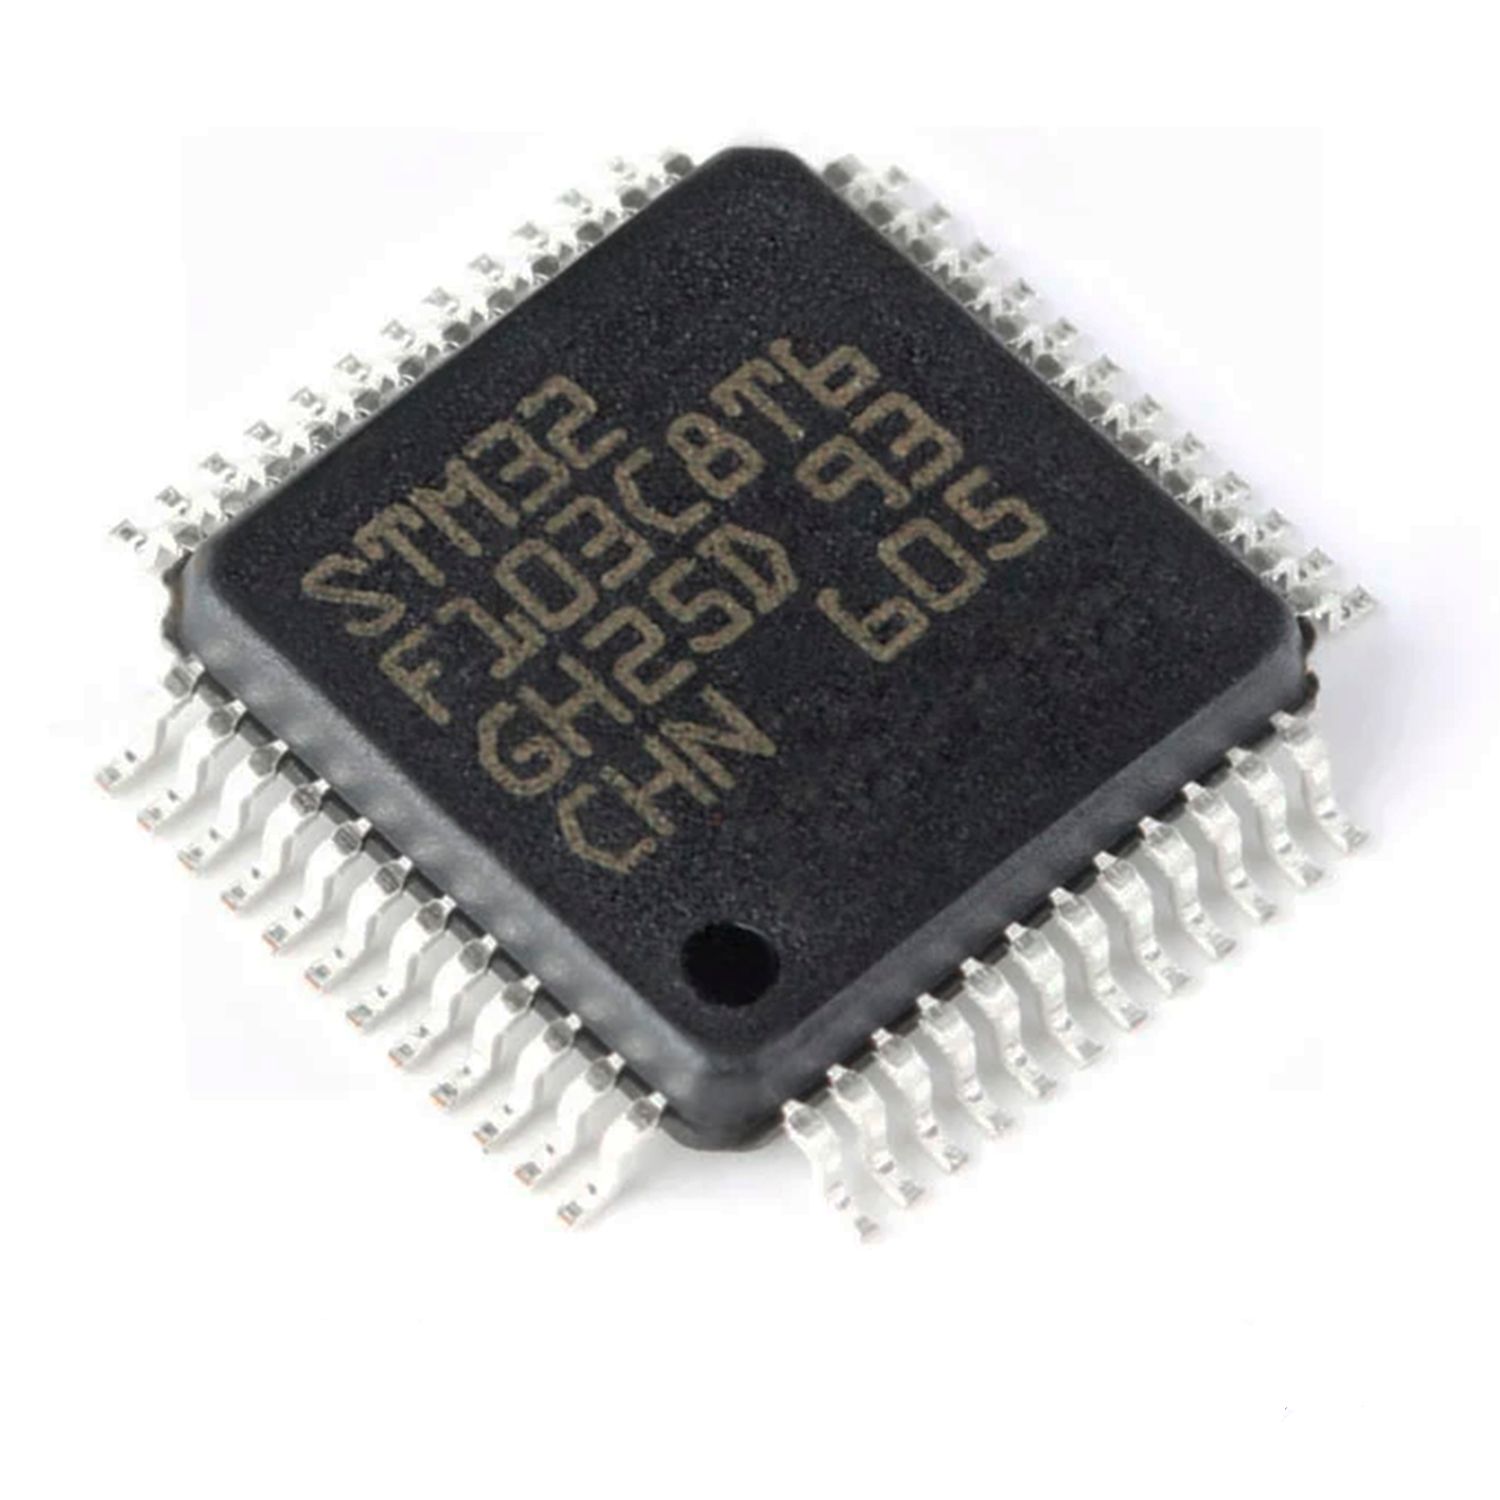 Микросхема STM32F103C8T6